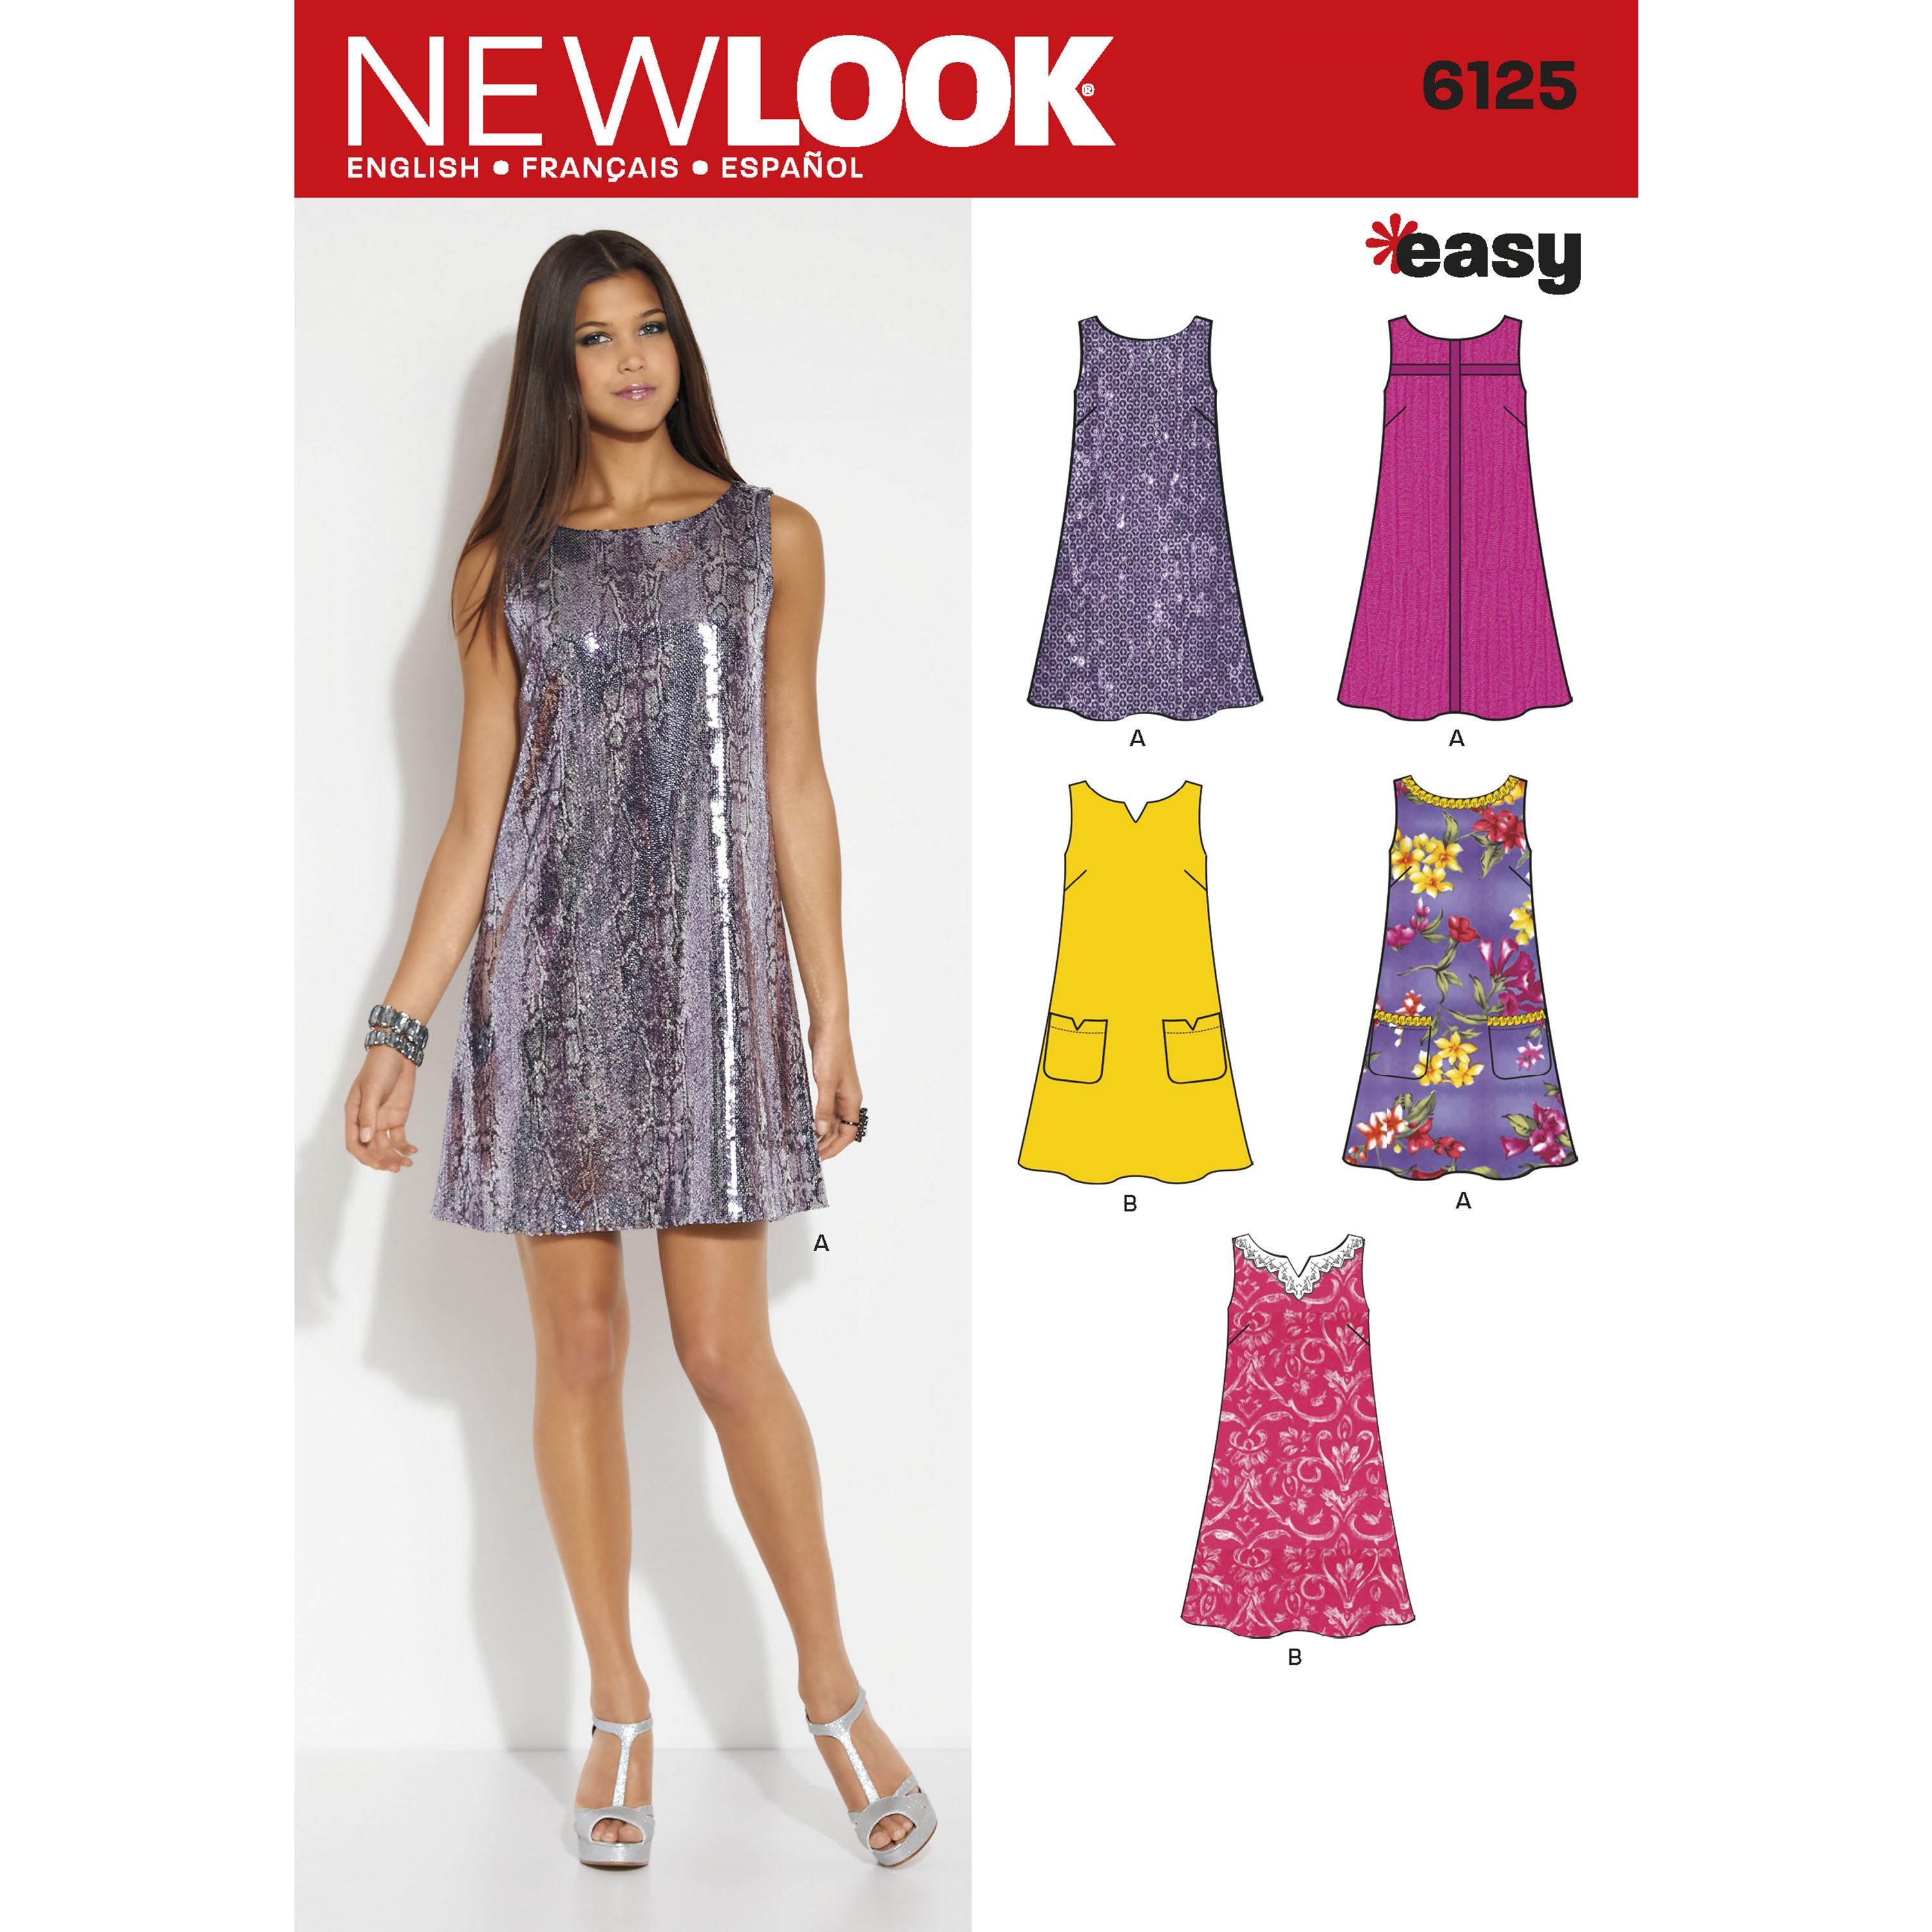 NewLook N6125 Misses' Dress